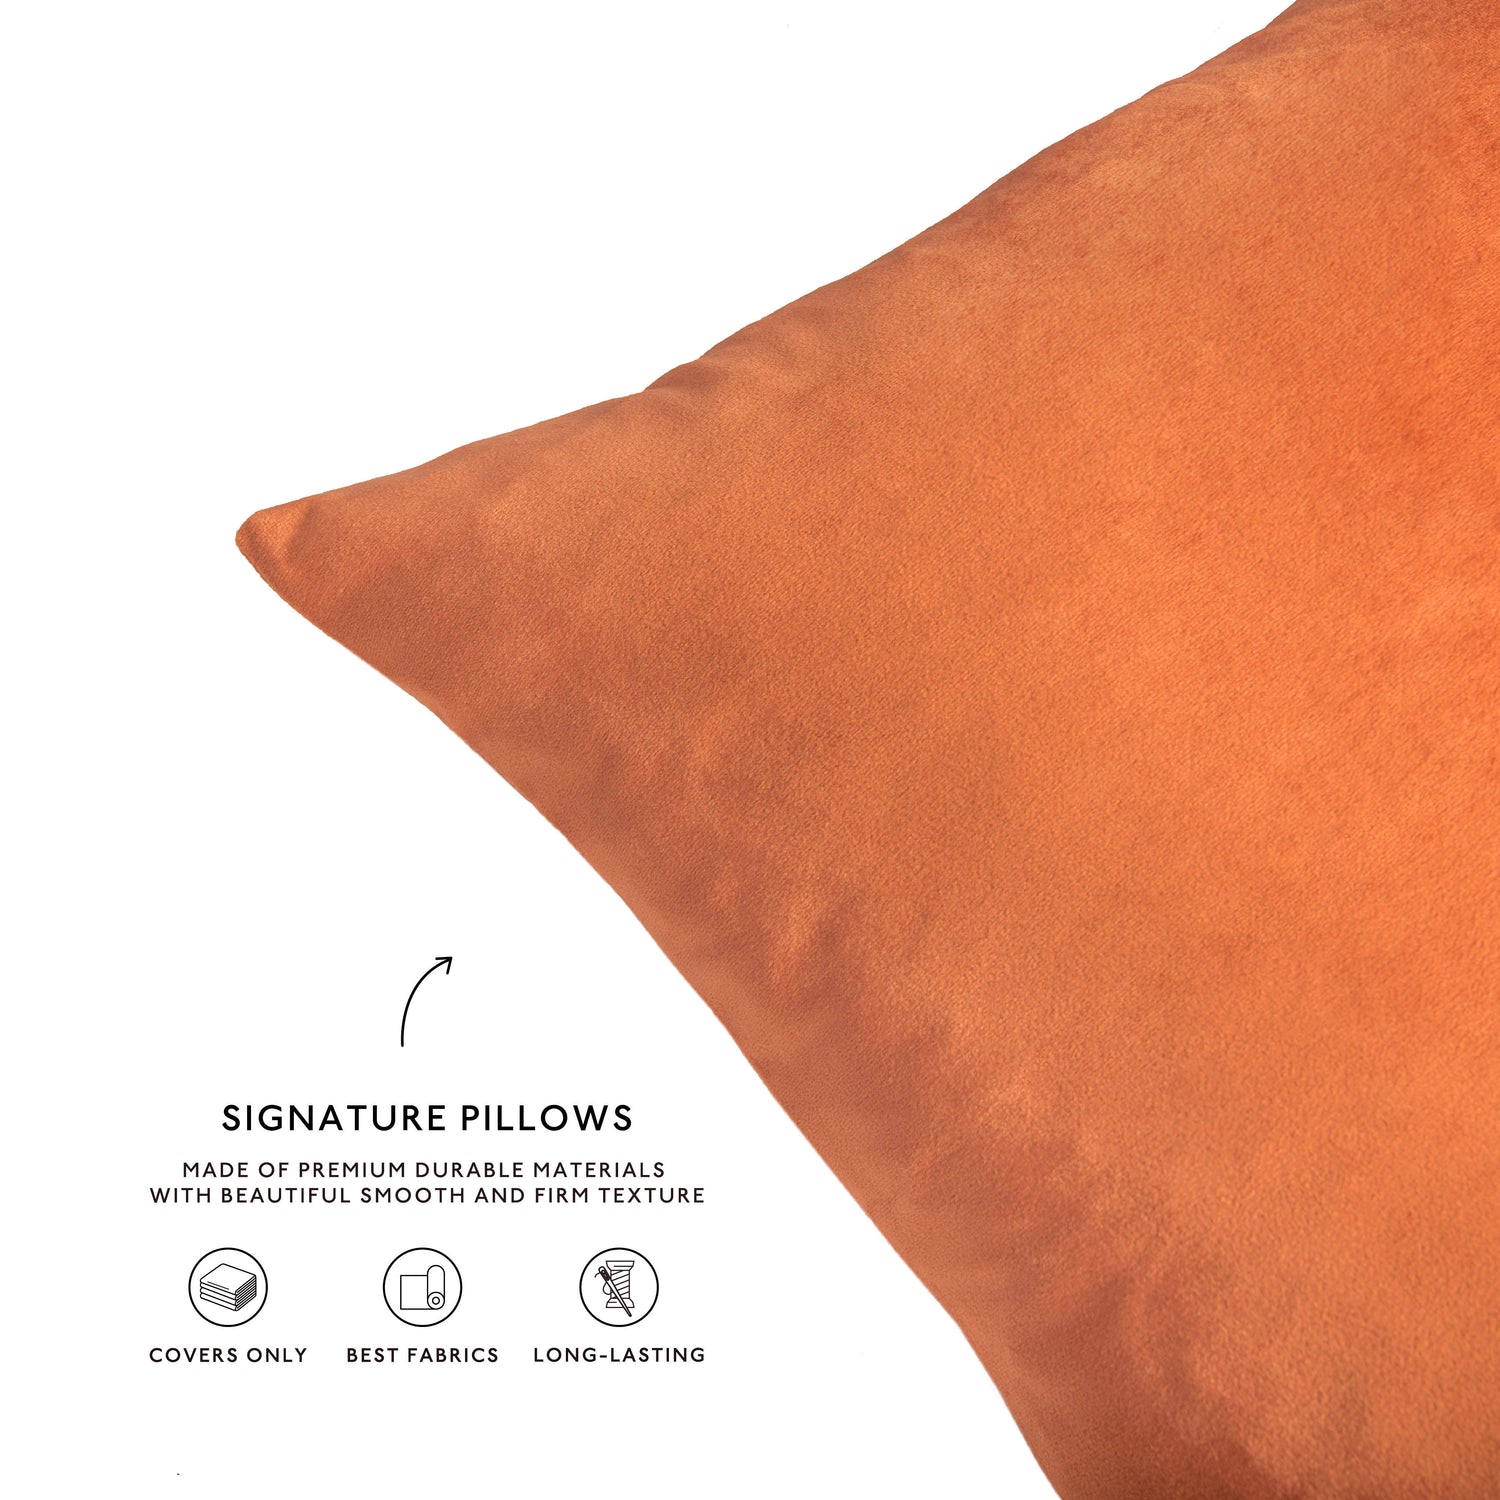 decorative throw pillow covers velvet home decor set of 4 green beige orange blue